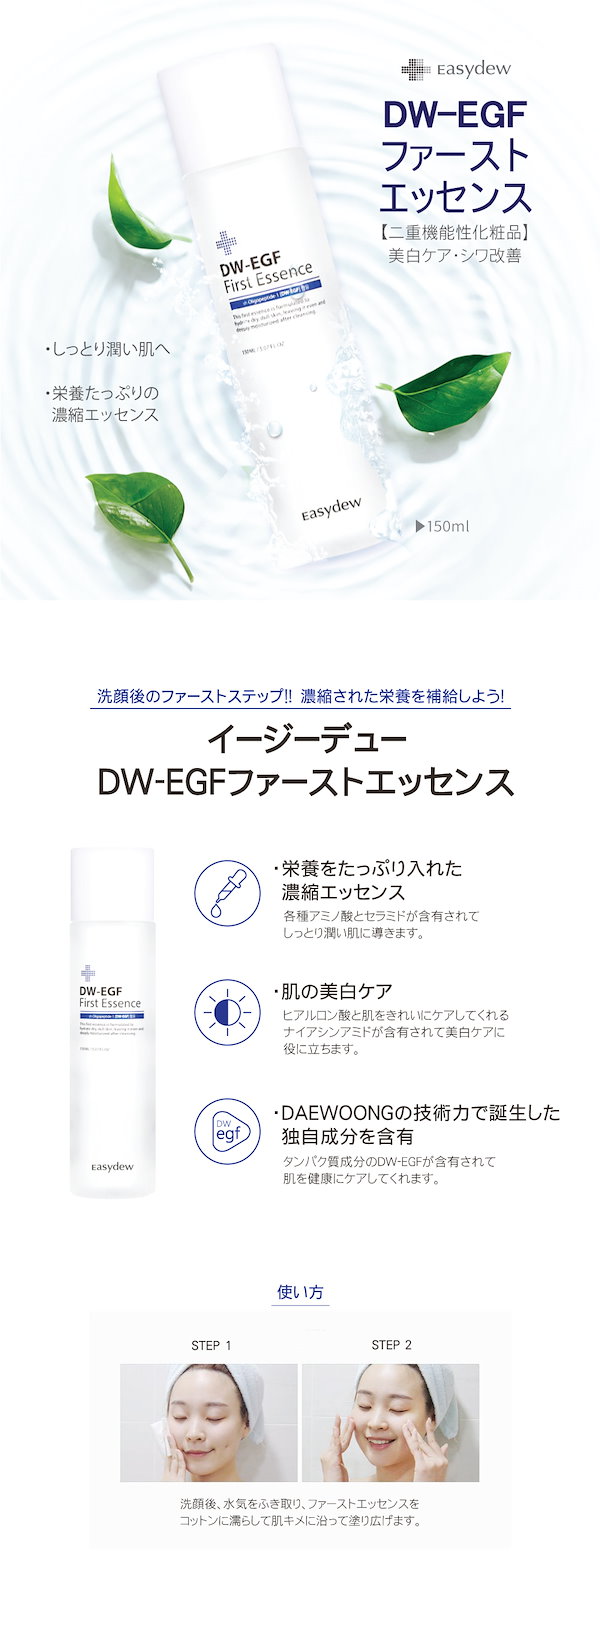 DW-EGF【数量限定発売】ファーストエッセンス【導入美容液】